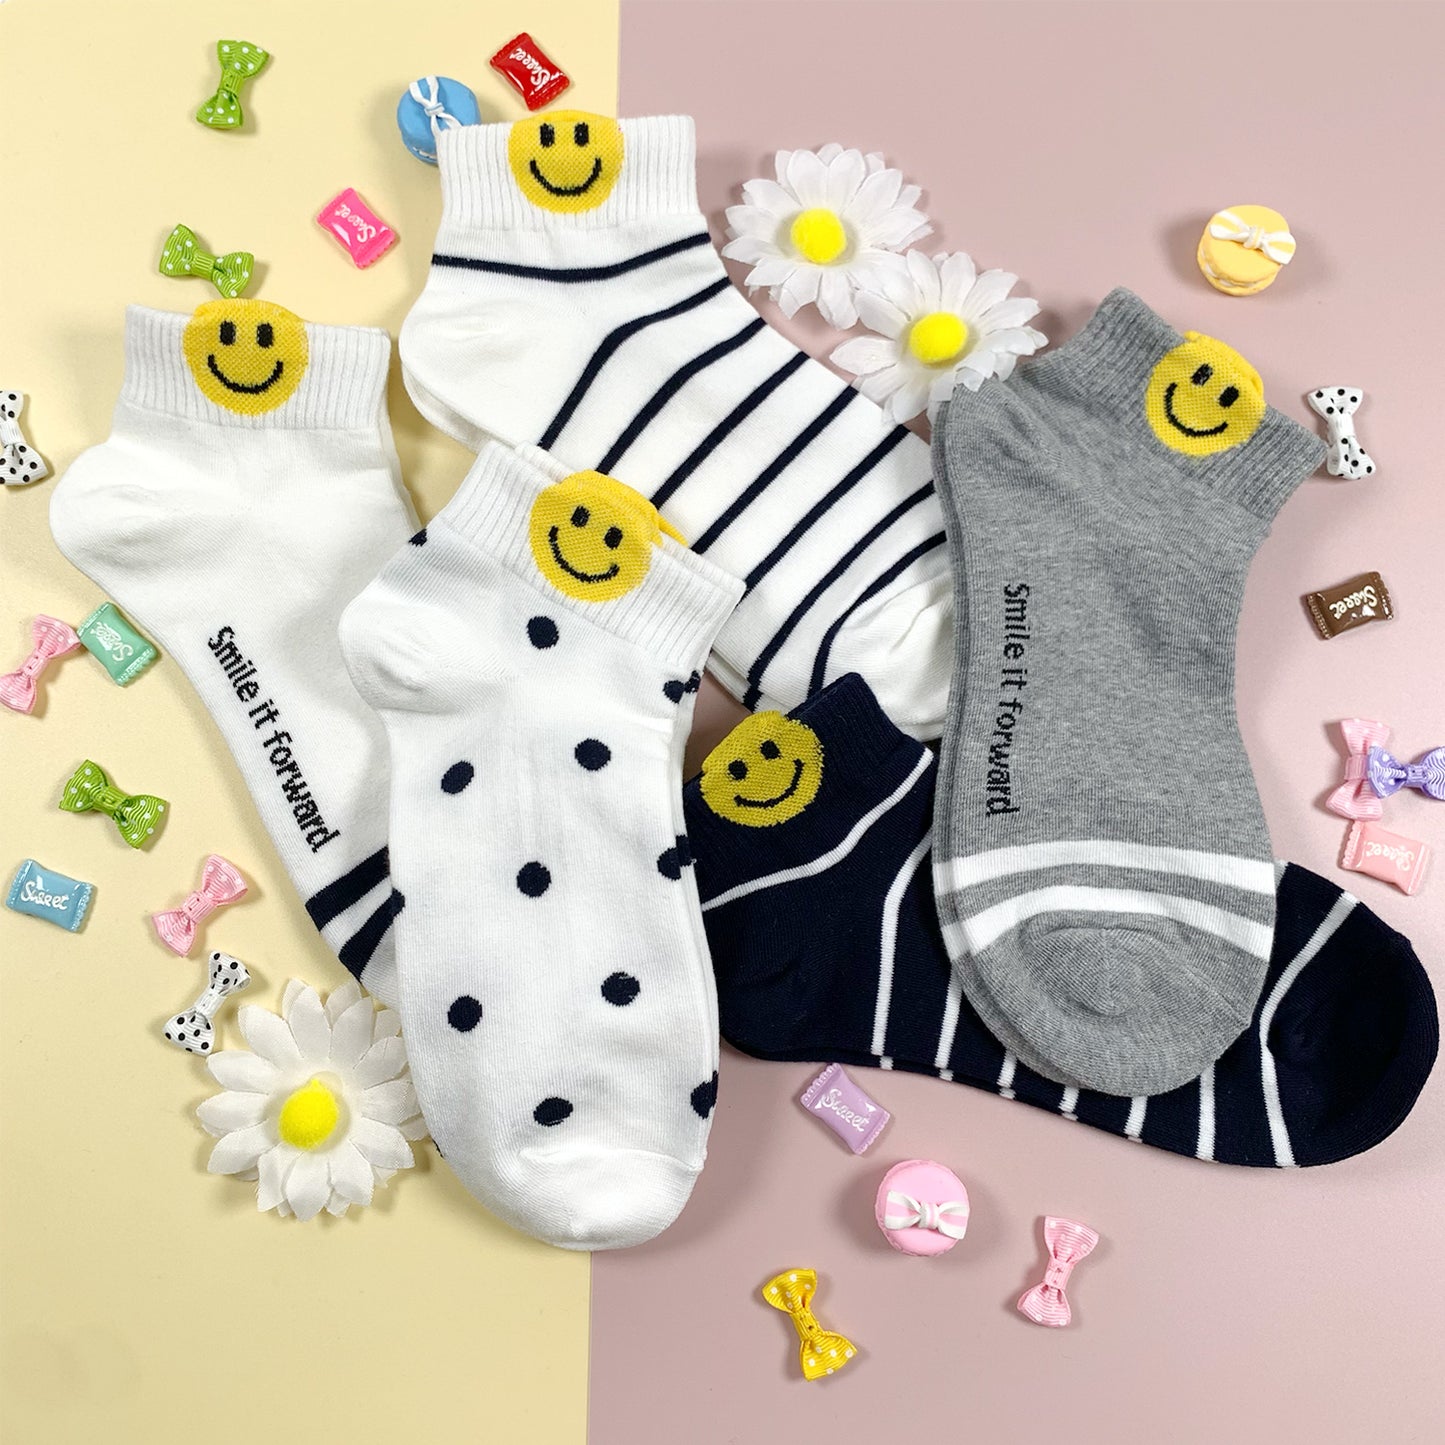 Women's Ankle Happy Smile Socks